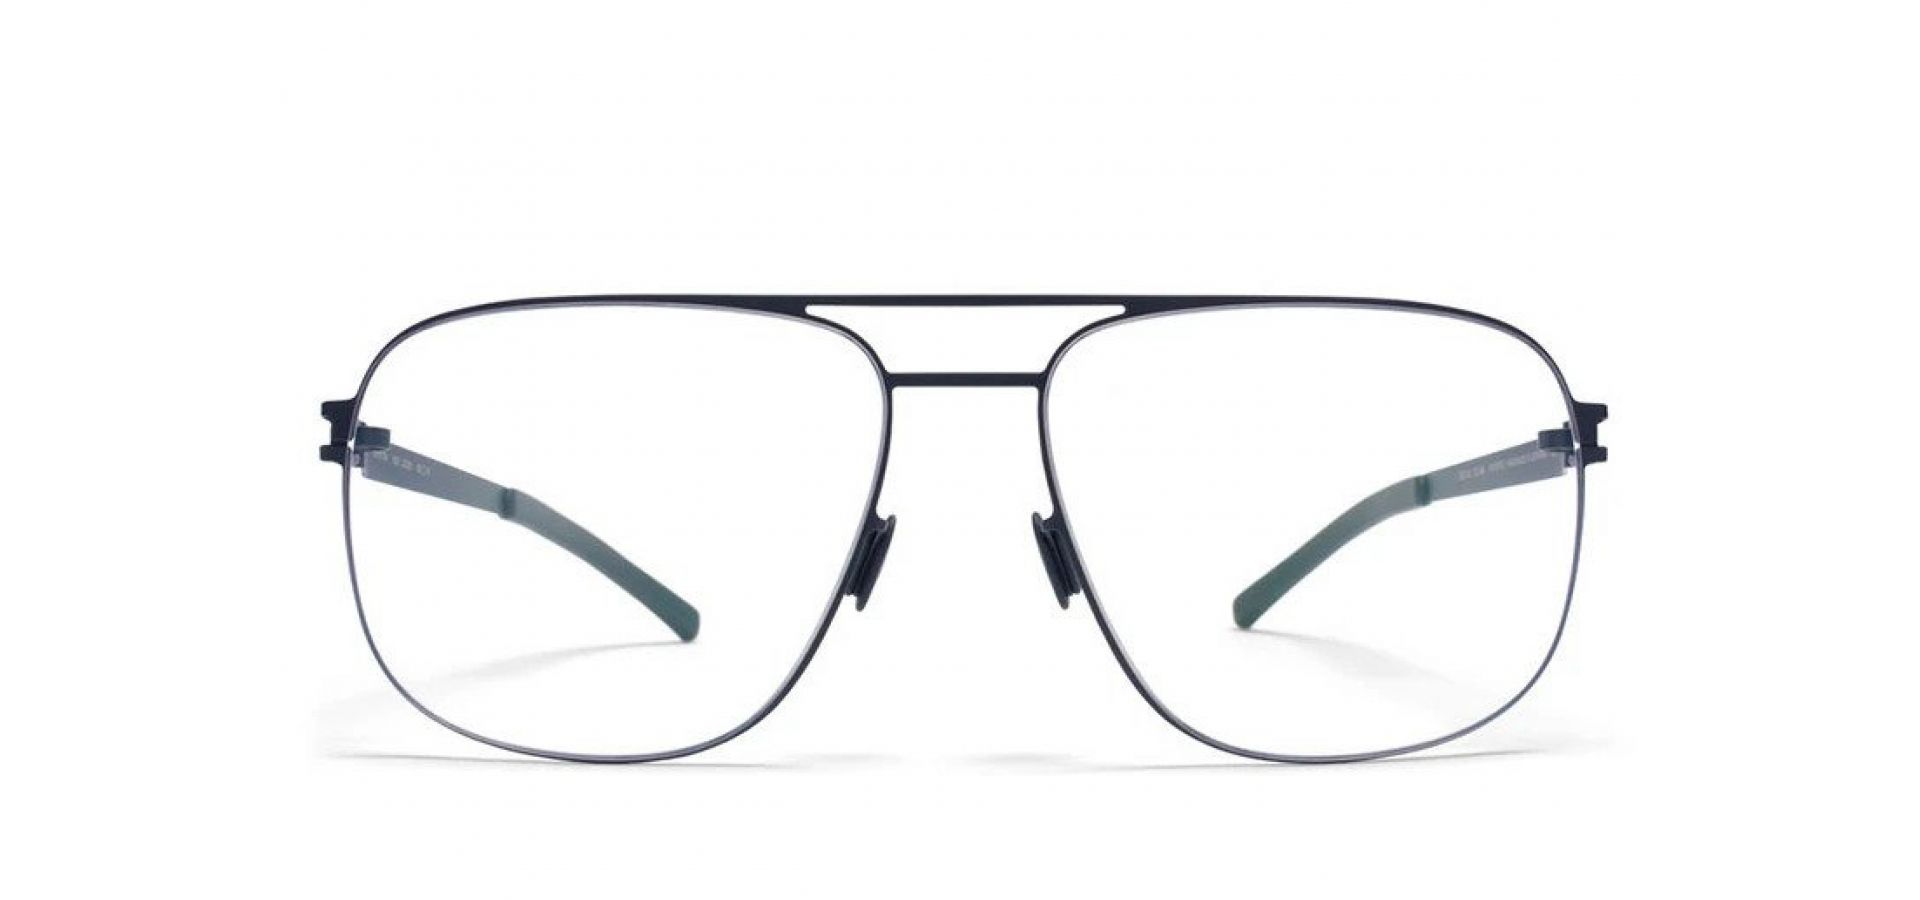 Korekcijska očala Mykita LOUIS NAVY CLEAR: Velikost: 55/23/140, Spol: unisex, Material: acetat